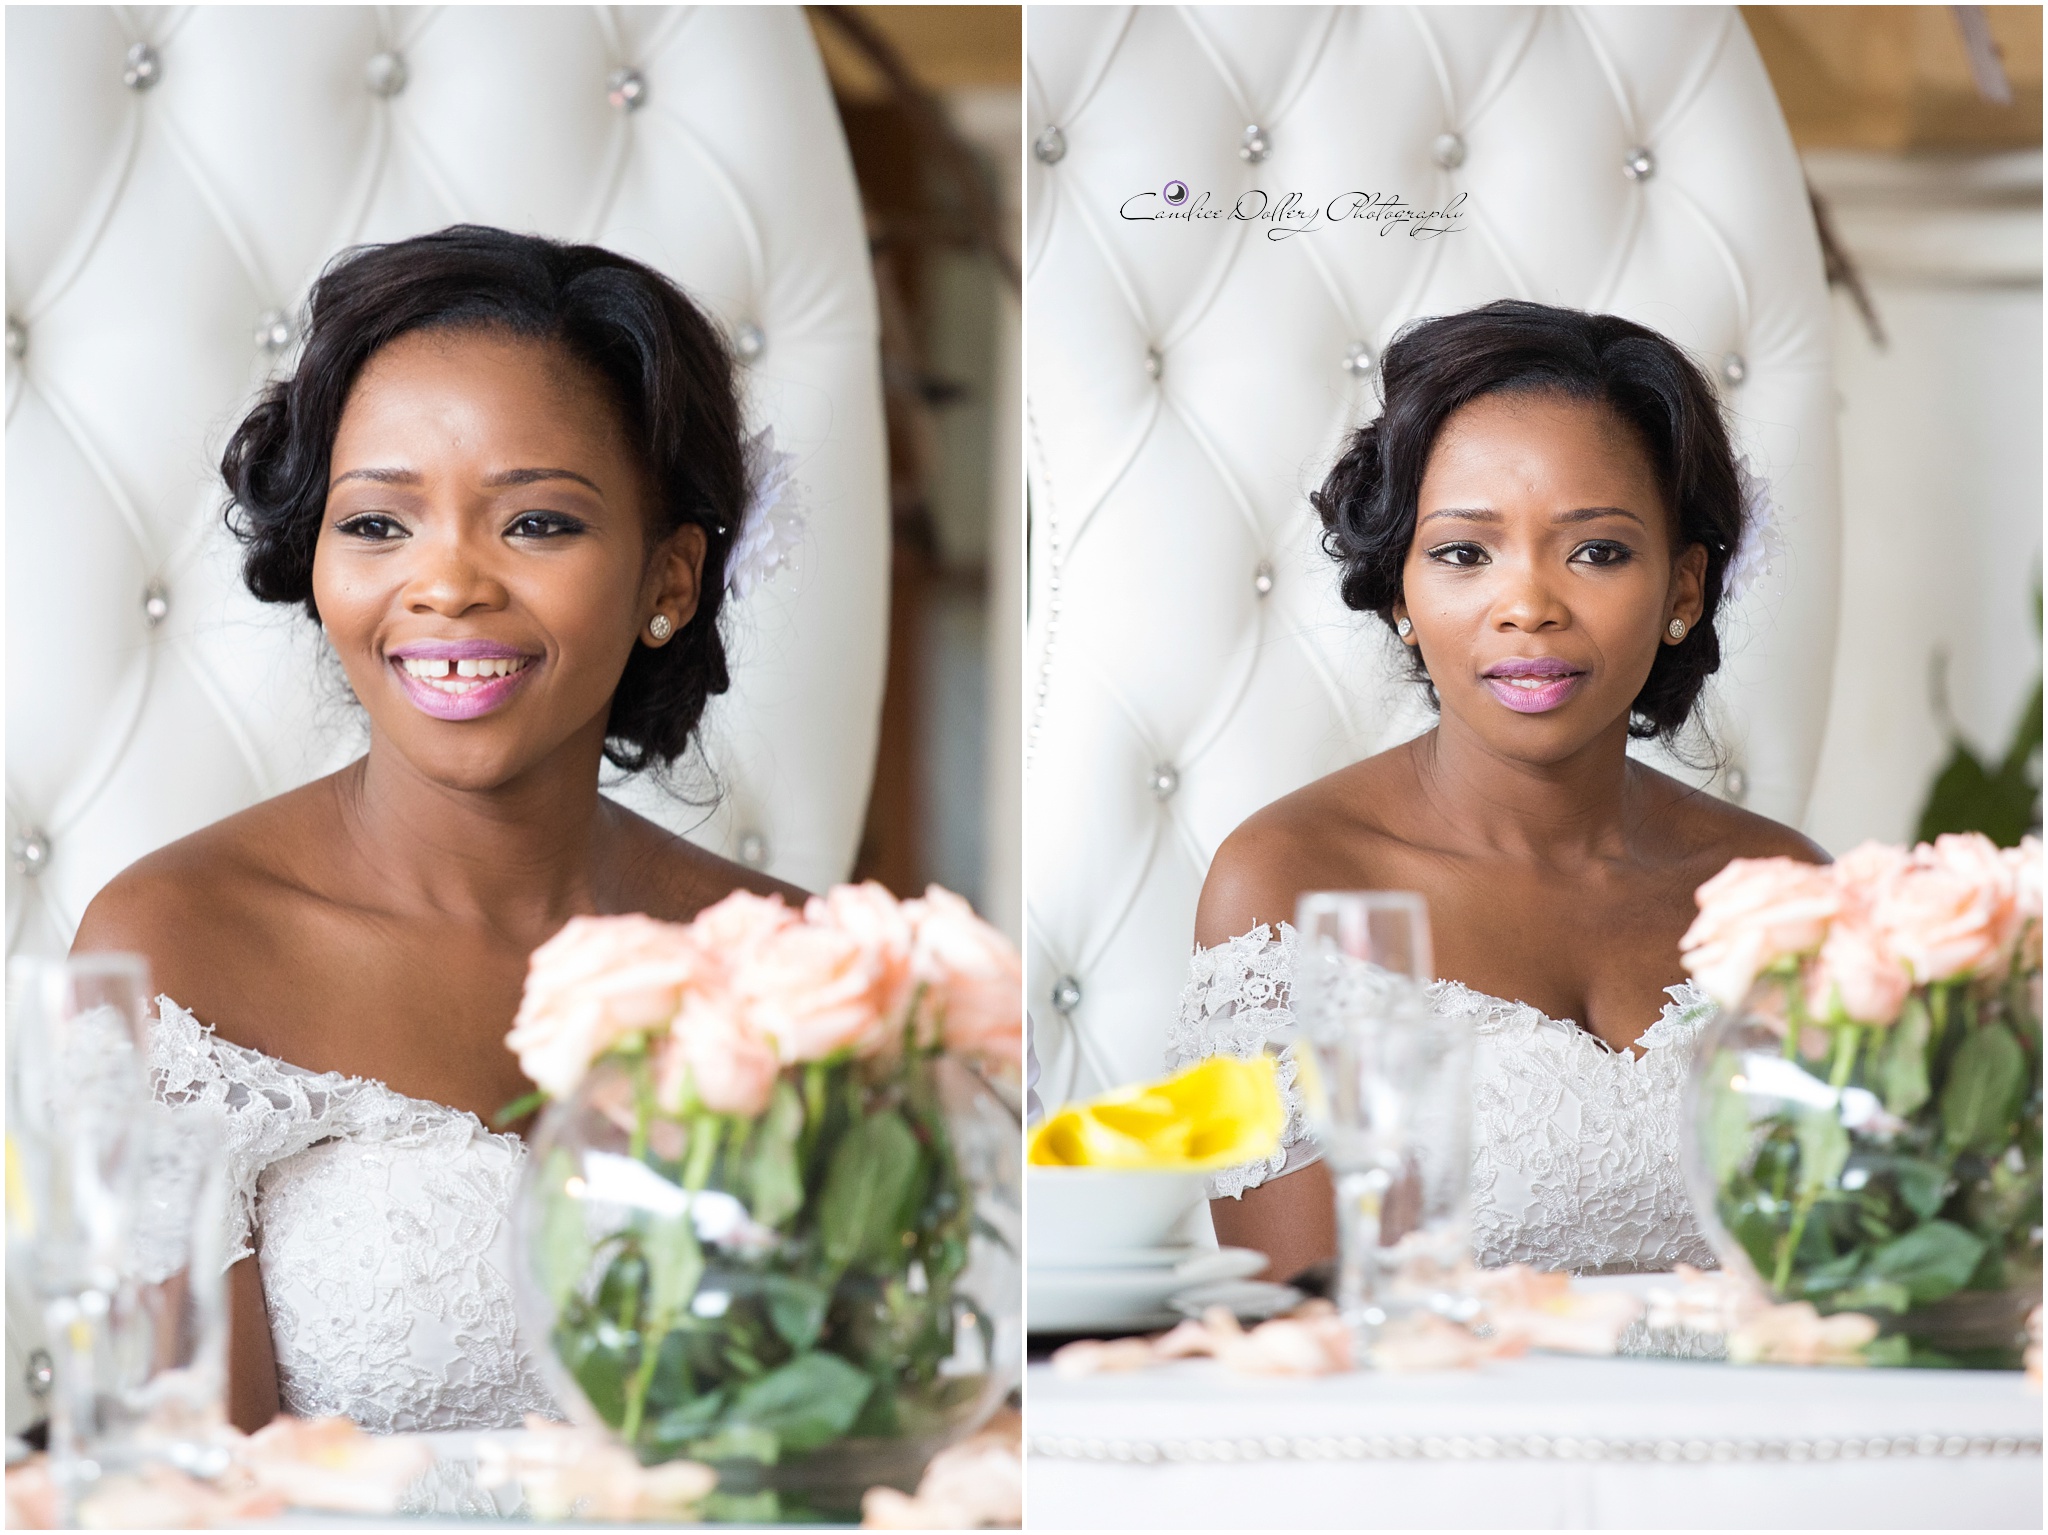 Asanda & Bonga's Wedding - Candice Dollery Photography_8264